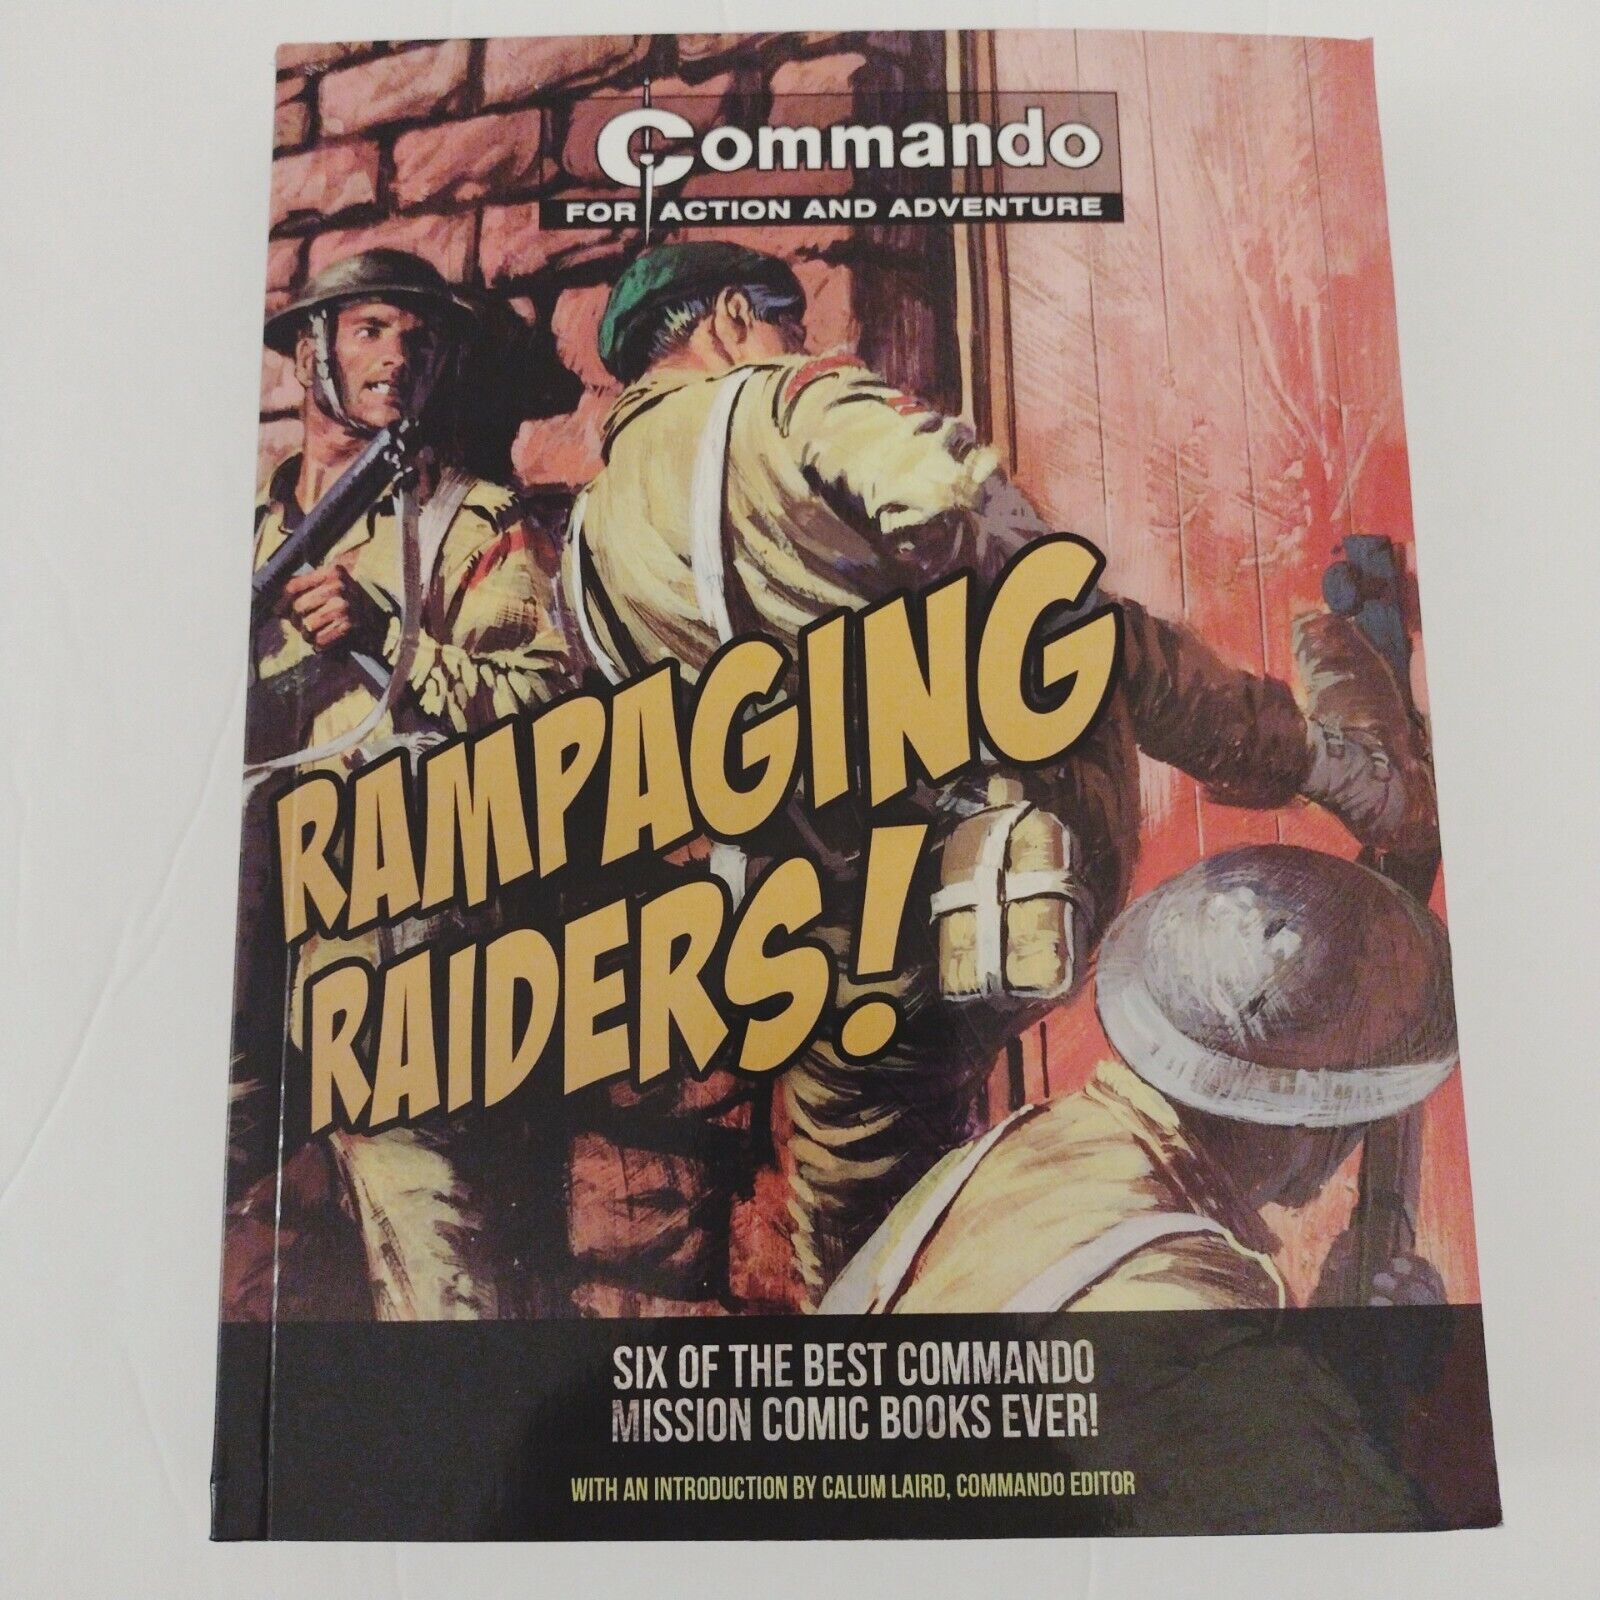 Commando: Rampaging Raiders Paperback by George Low